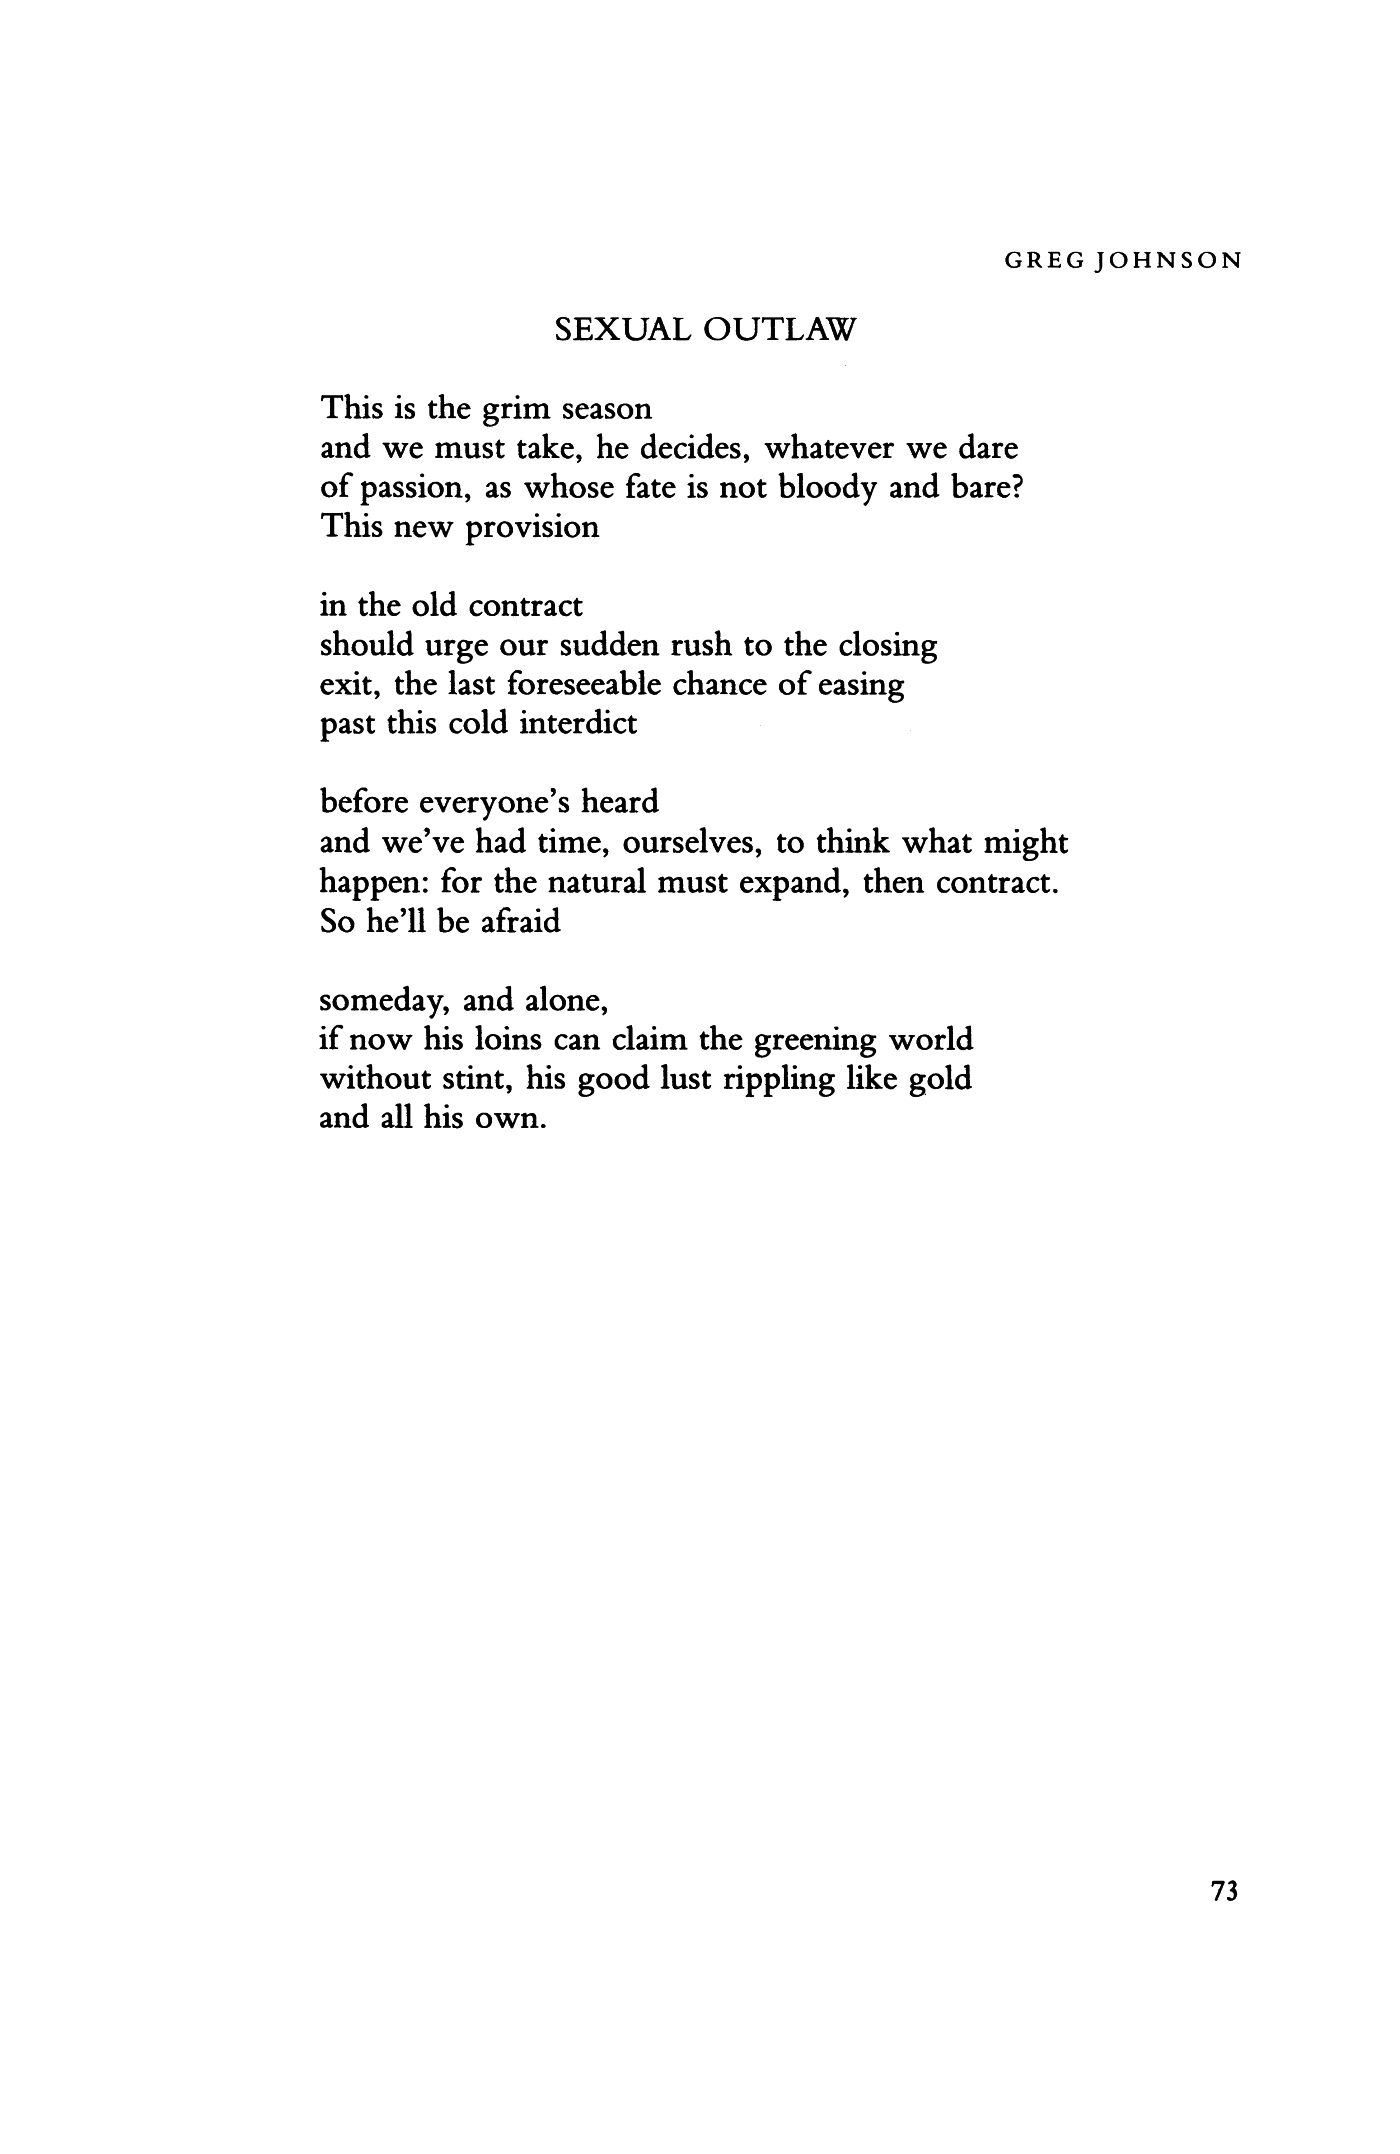 dirty poems